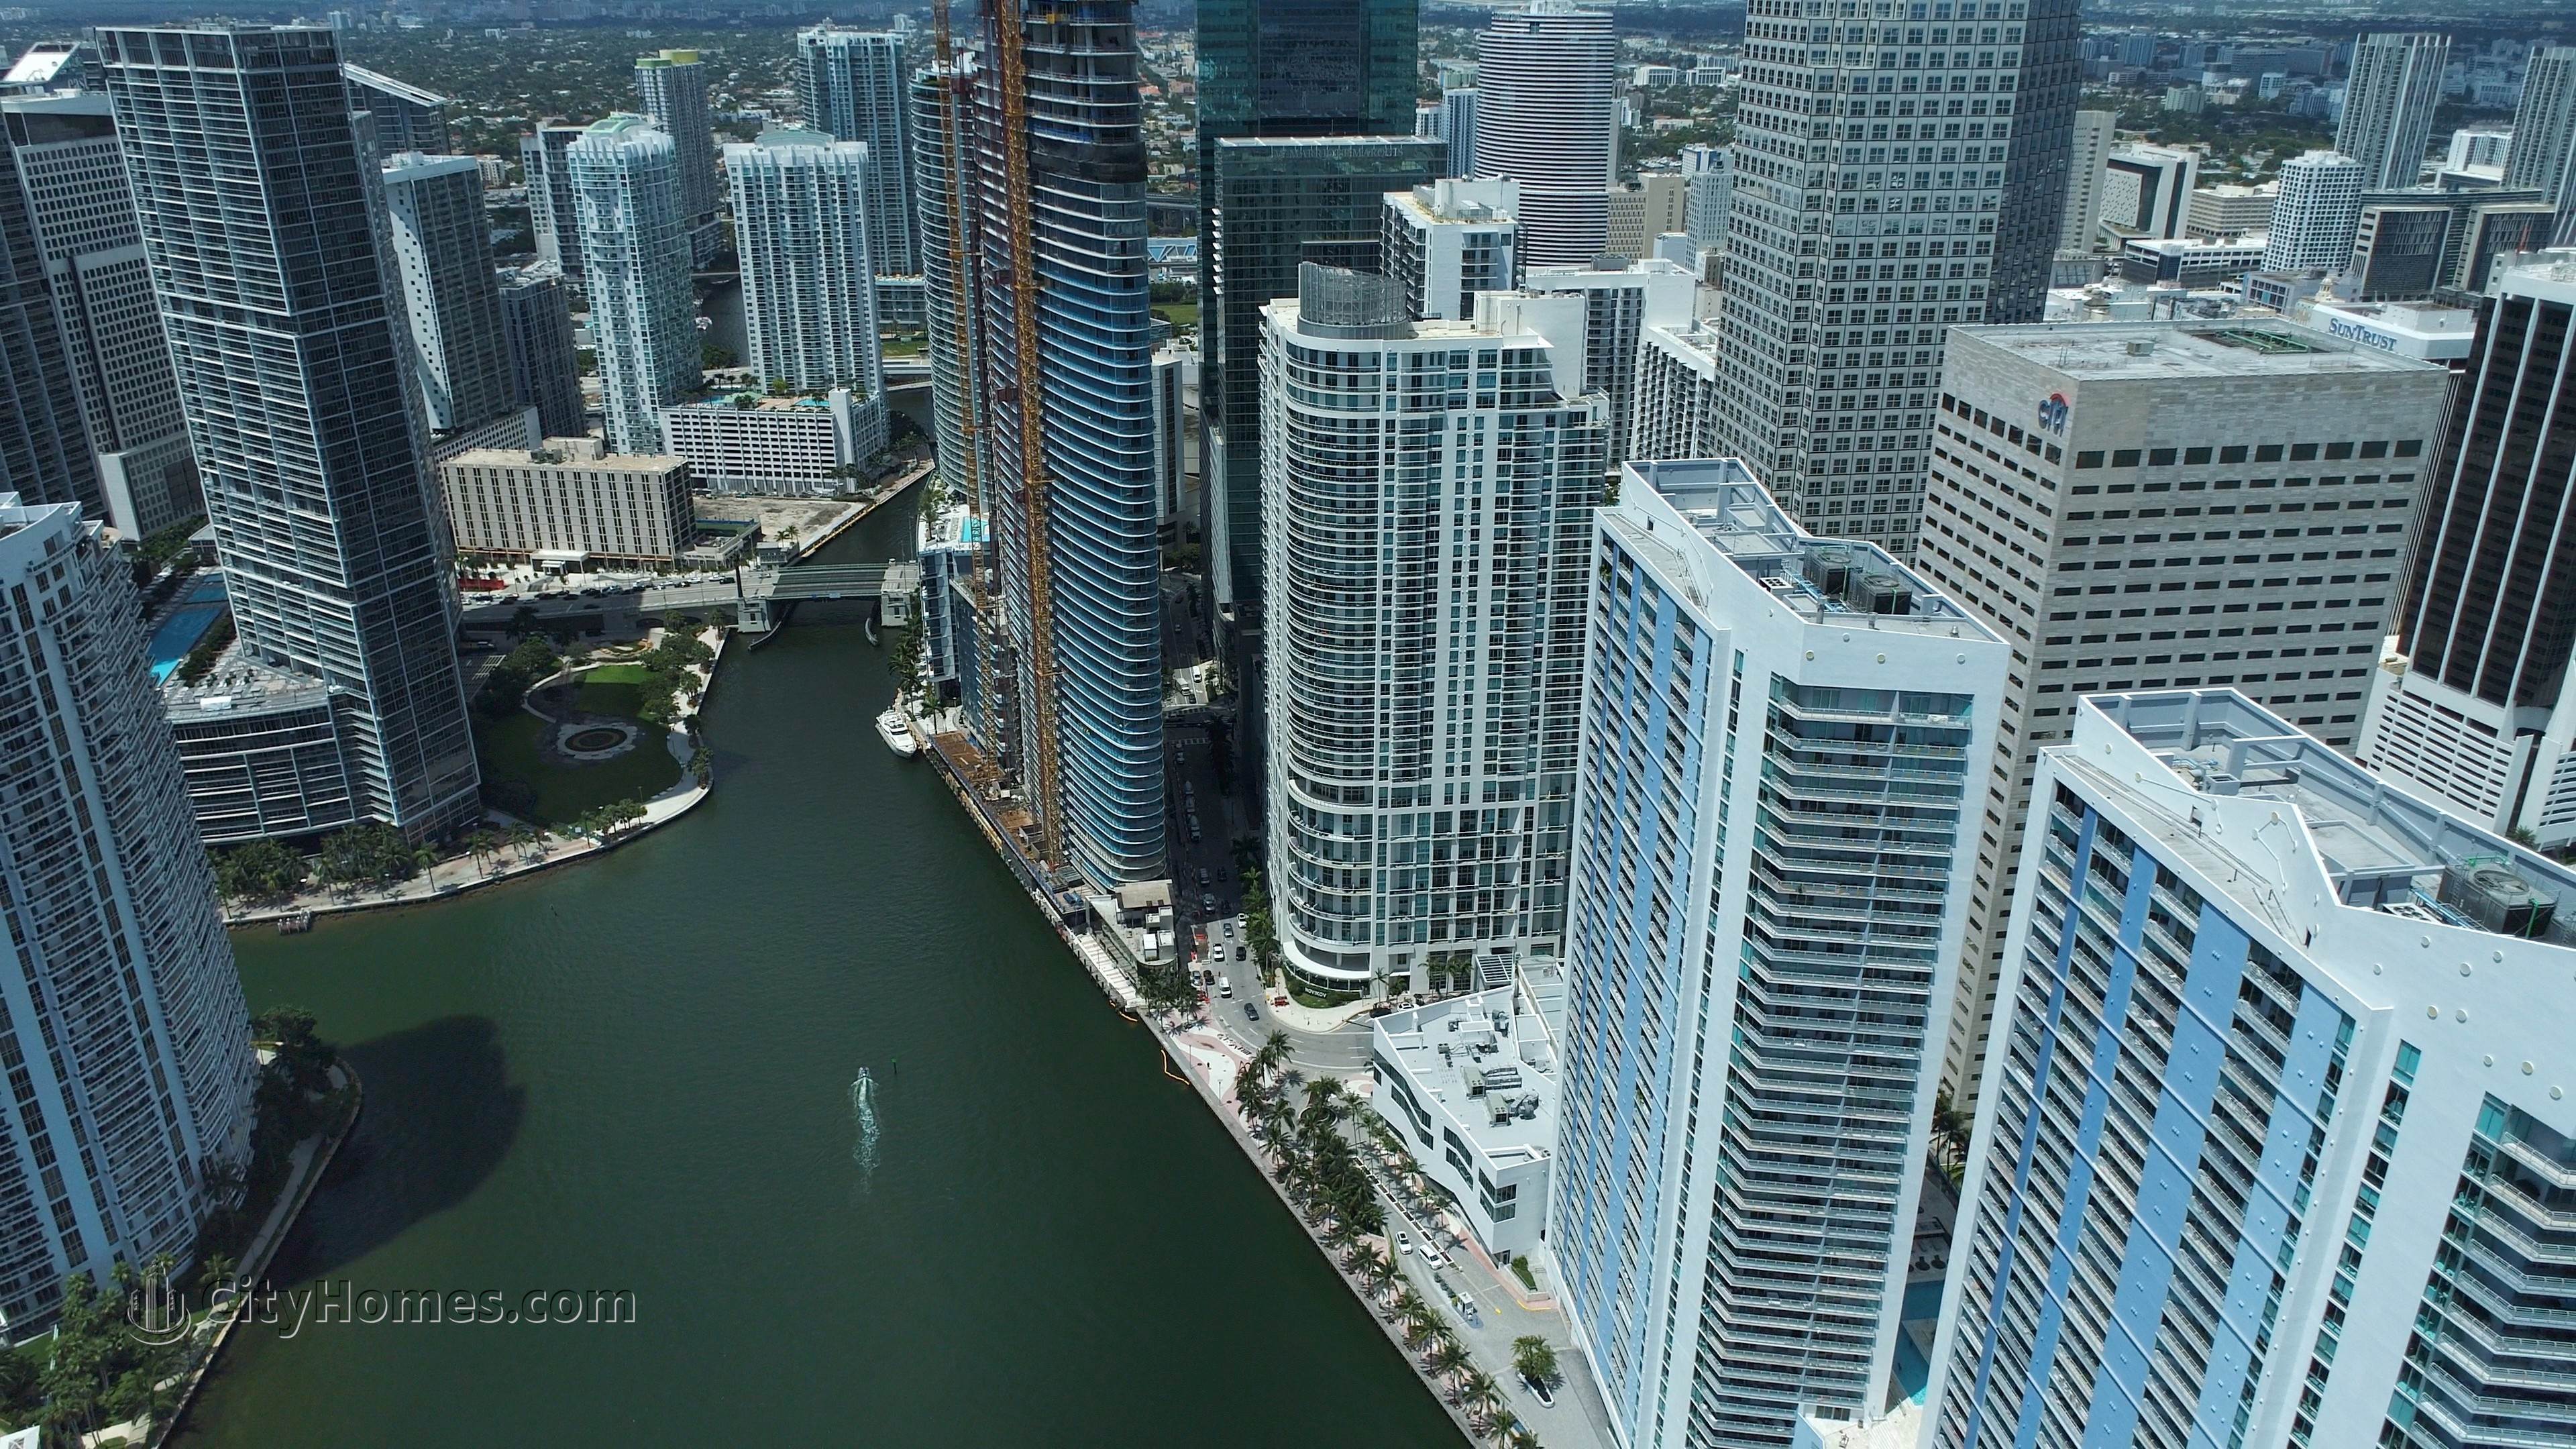 5. One Miami gebouw op 325 And 335 S Biscayne Blvd, Miami, FL 33131